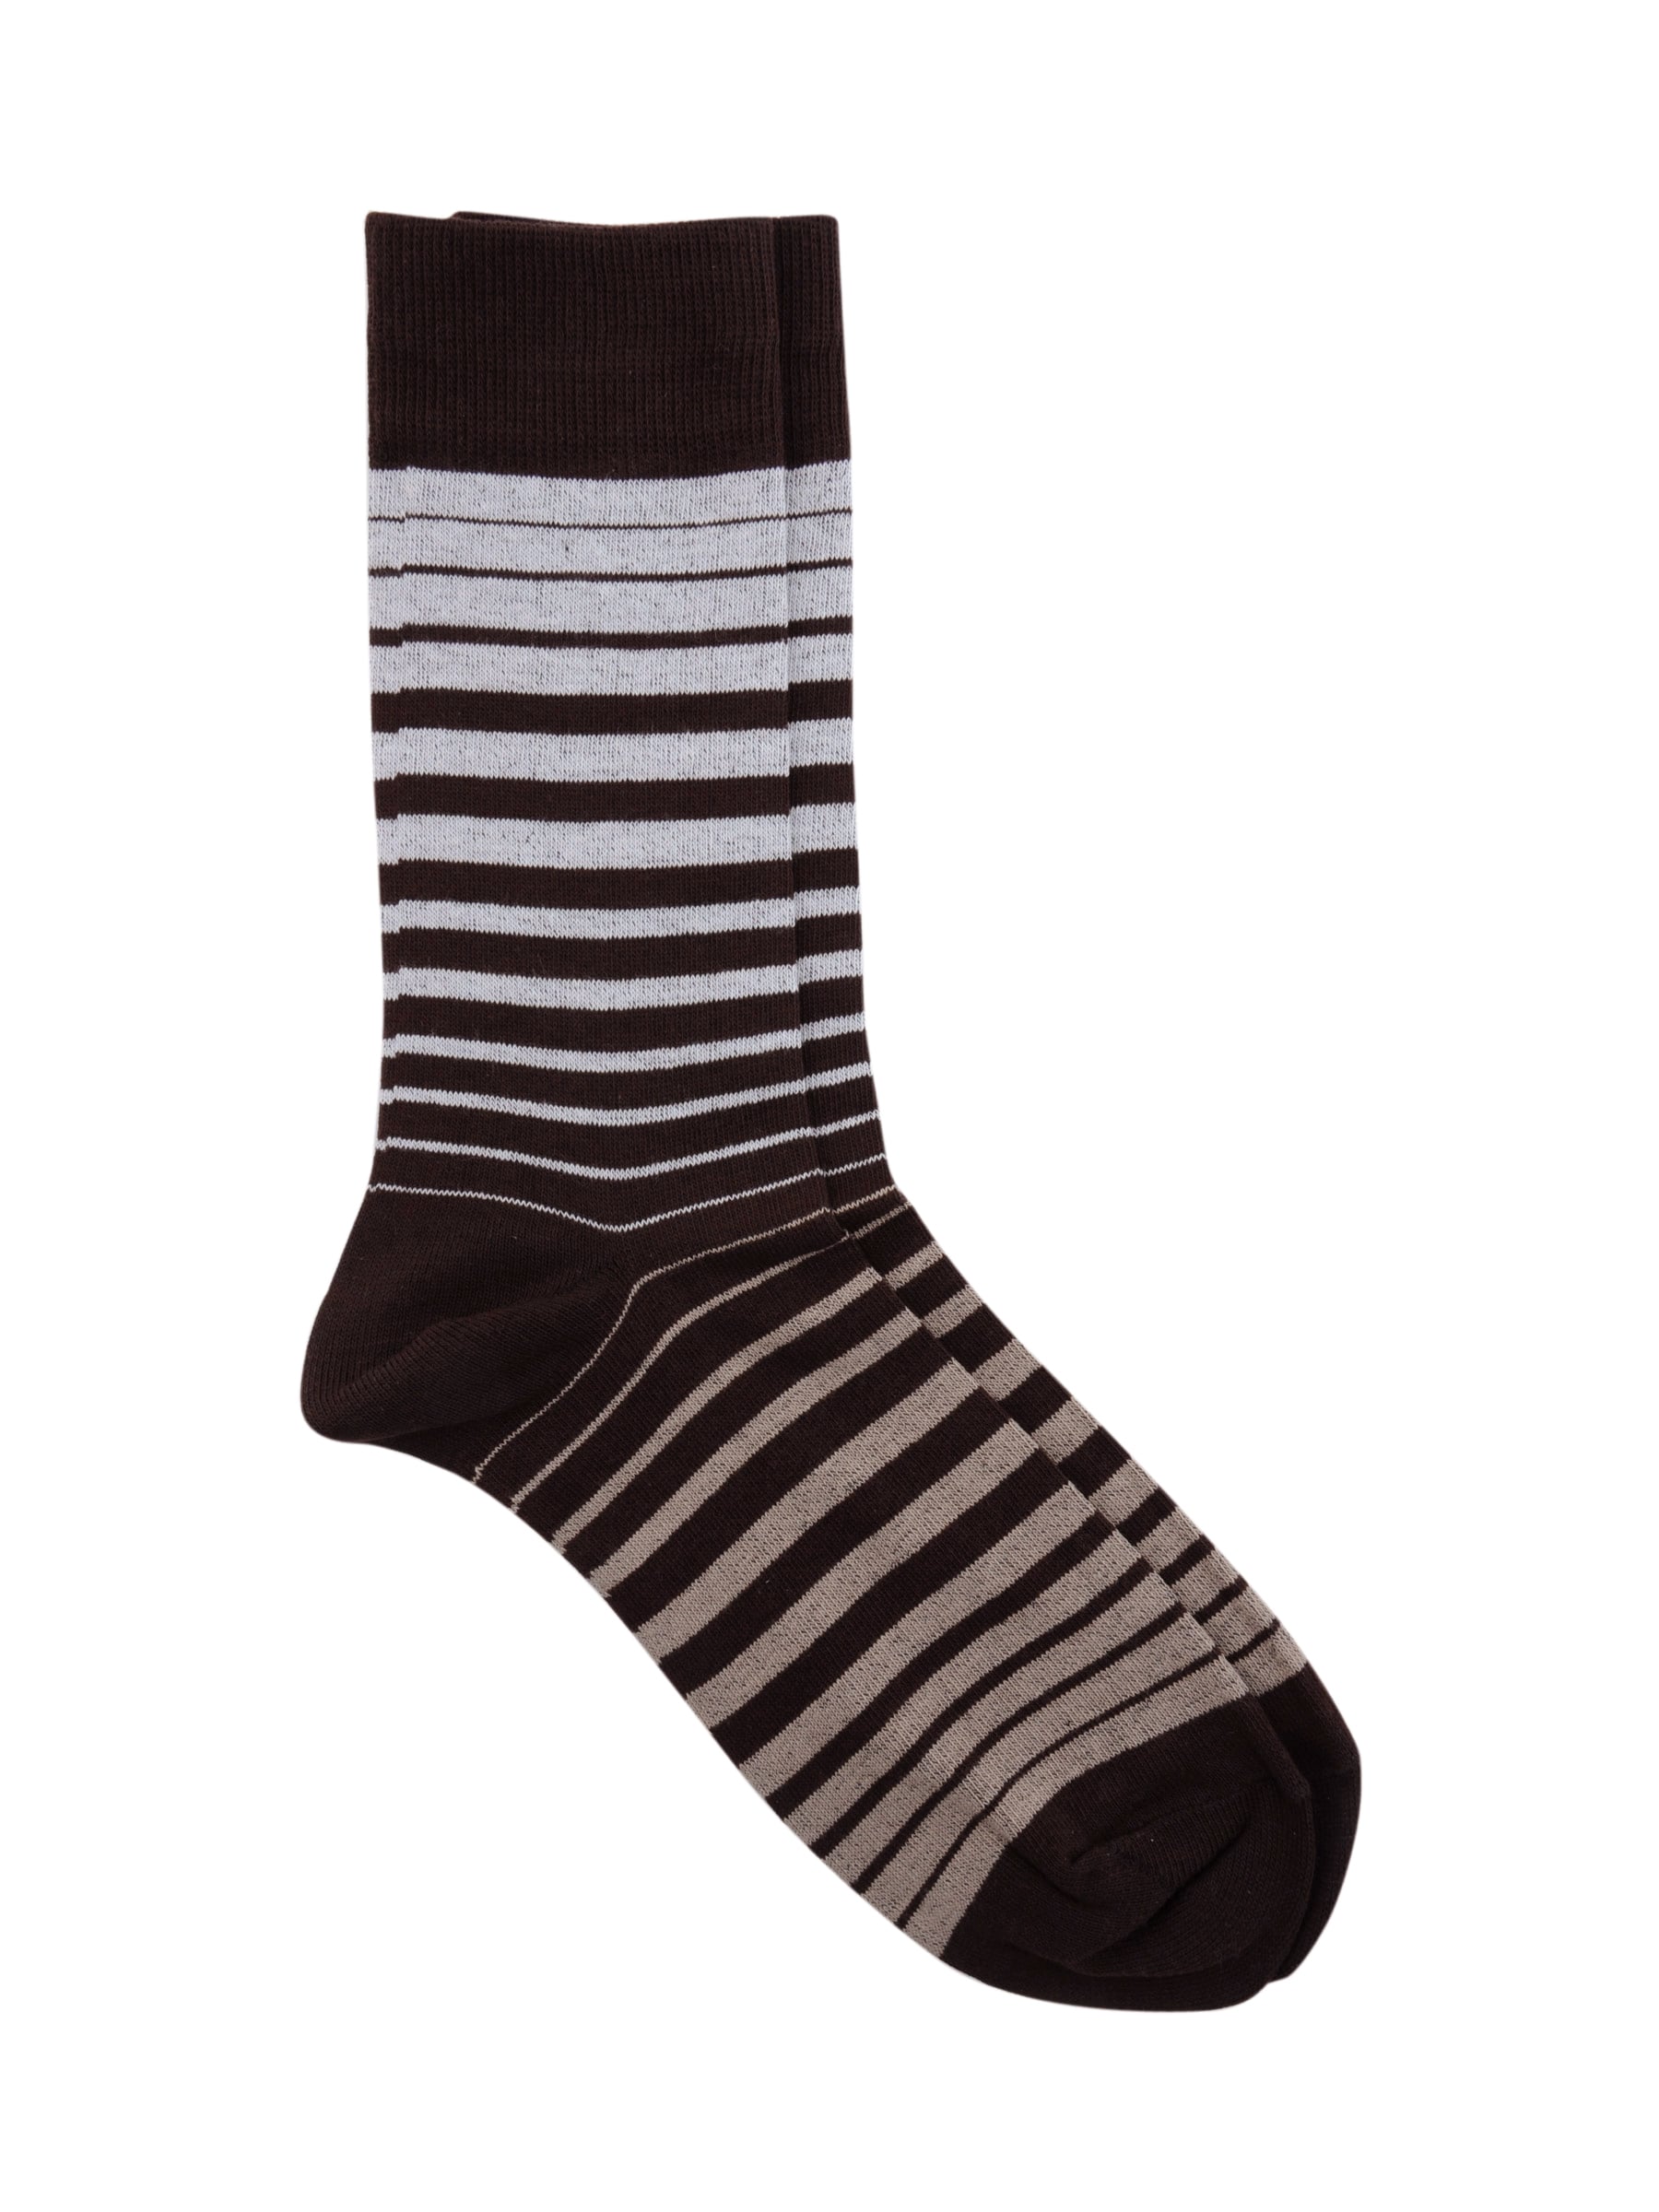 Reid & Taylor Men Stripes Brown Socks